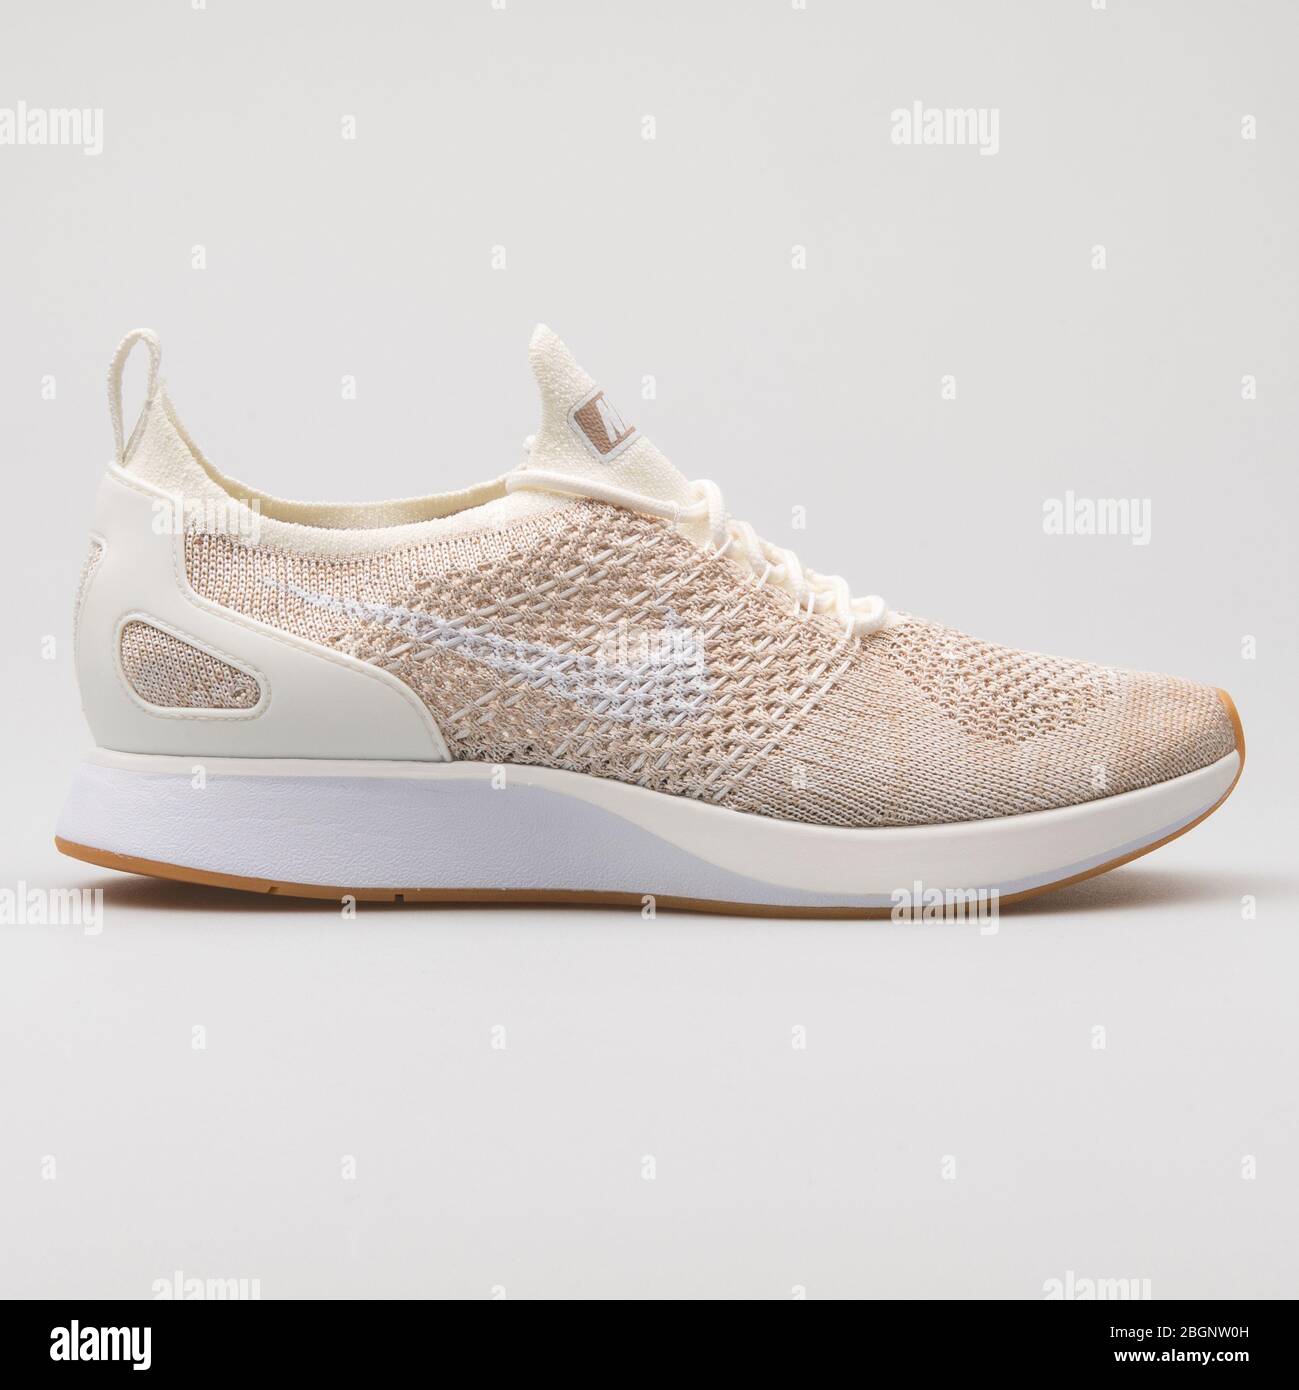 VIENNE, AUTRICHE - 29 AOÛT 2017 : Nike Air Zoom Mariah Flyknit Racer  Sneaker beige et blanche sur fond blanc Photo Stock - Alamy